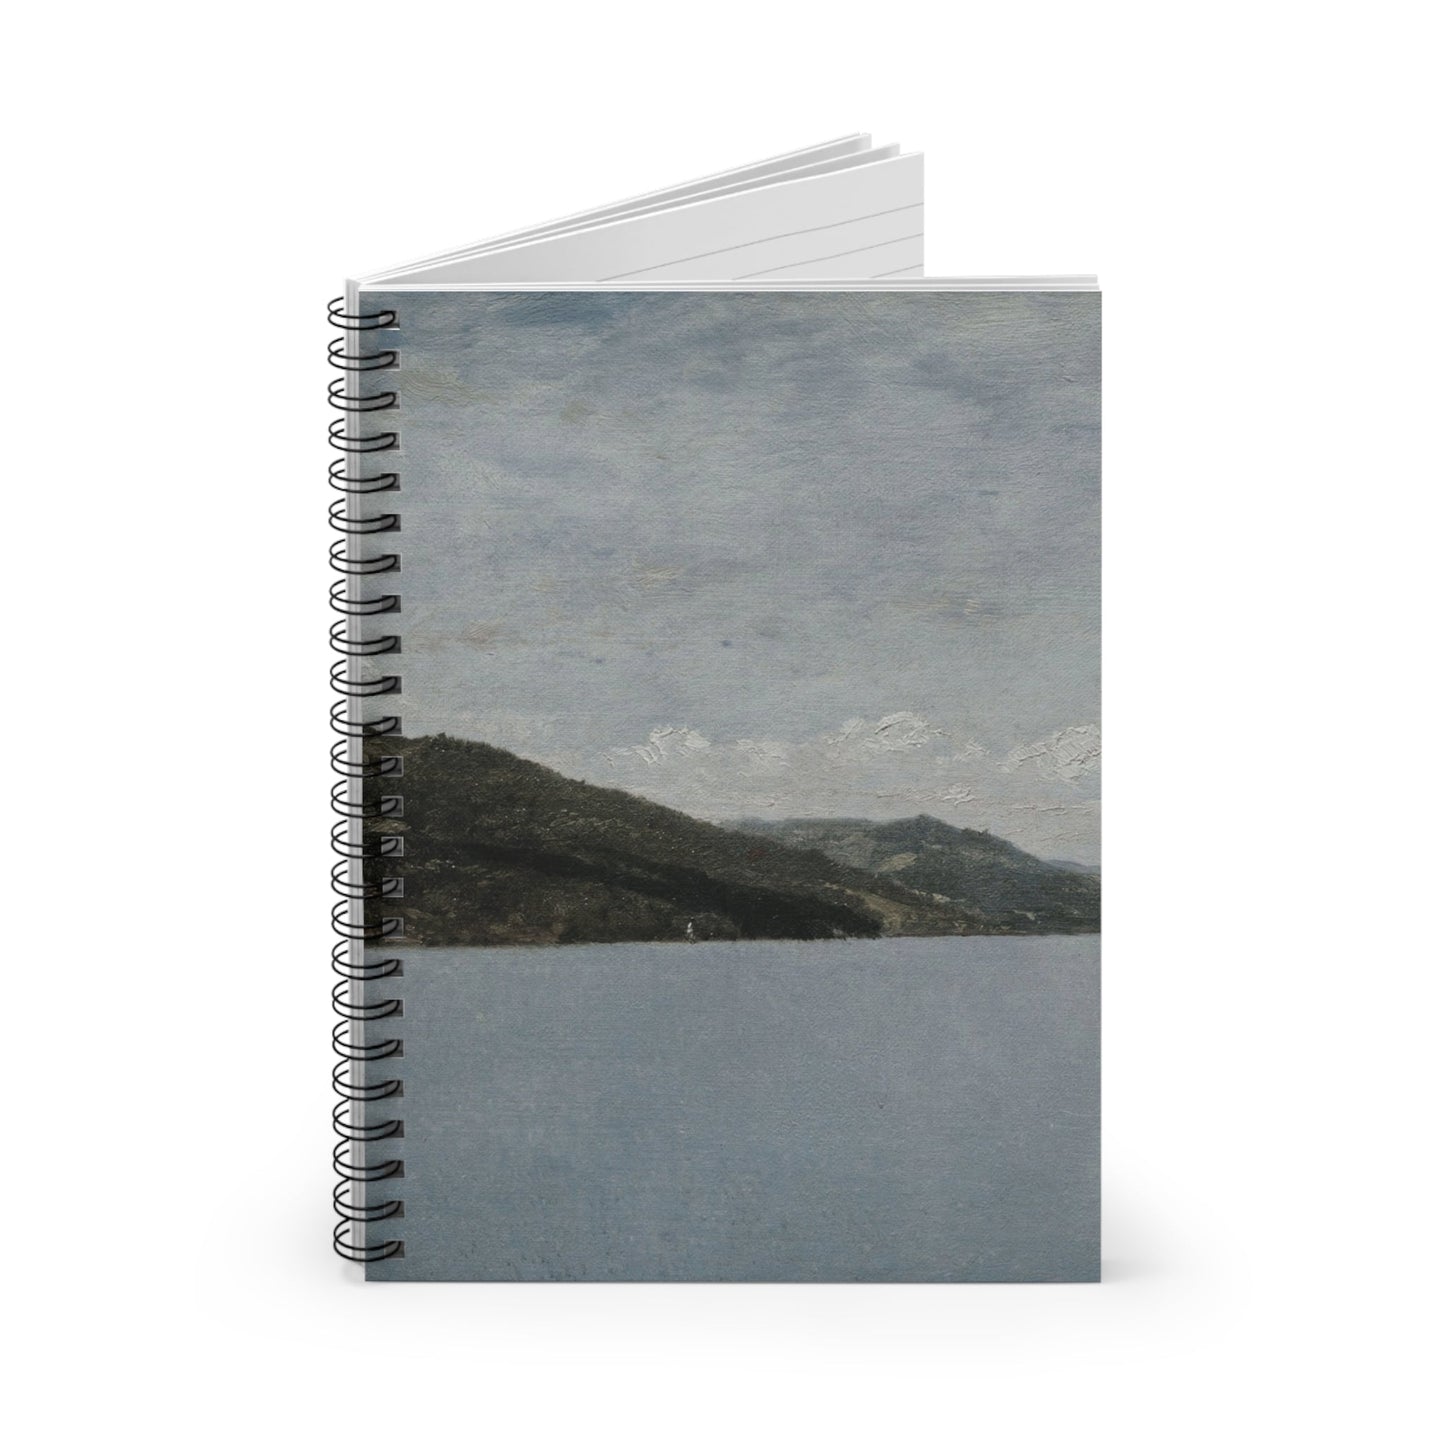 Minimalist Landscape Spiral Notebook Standing up on White Desk